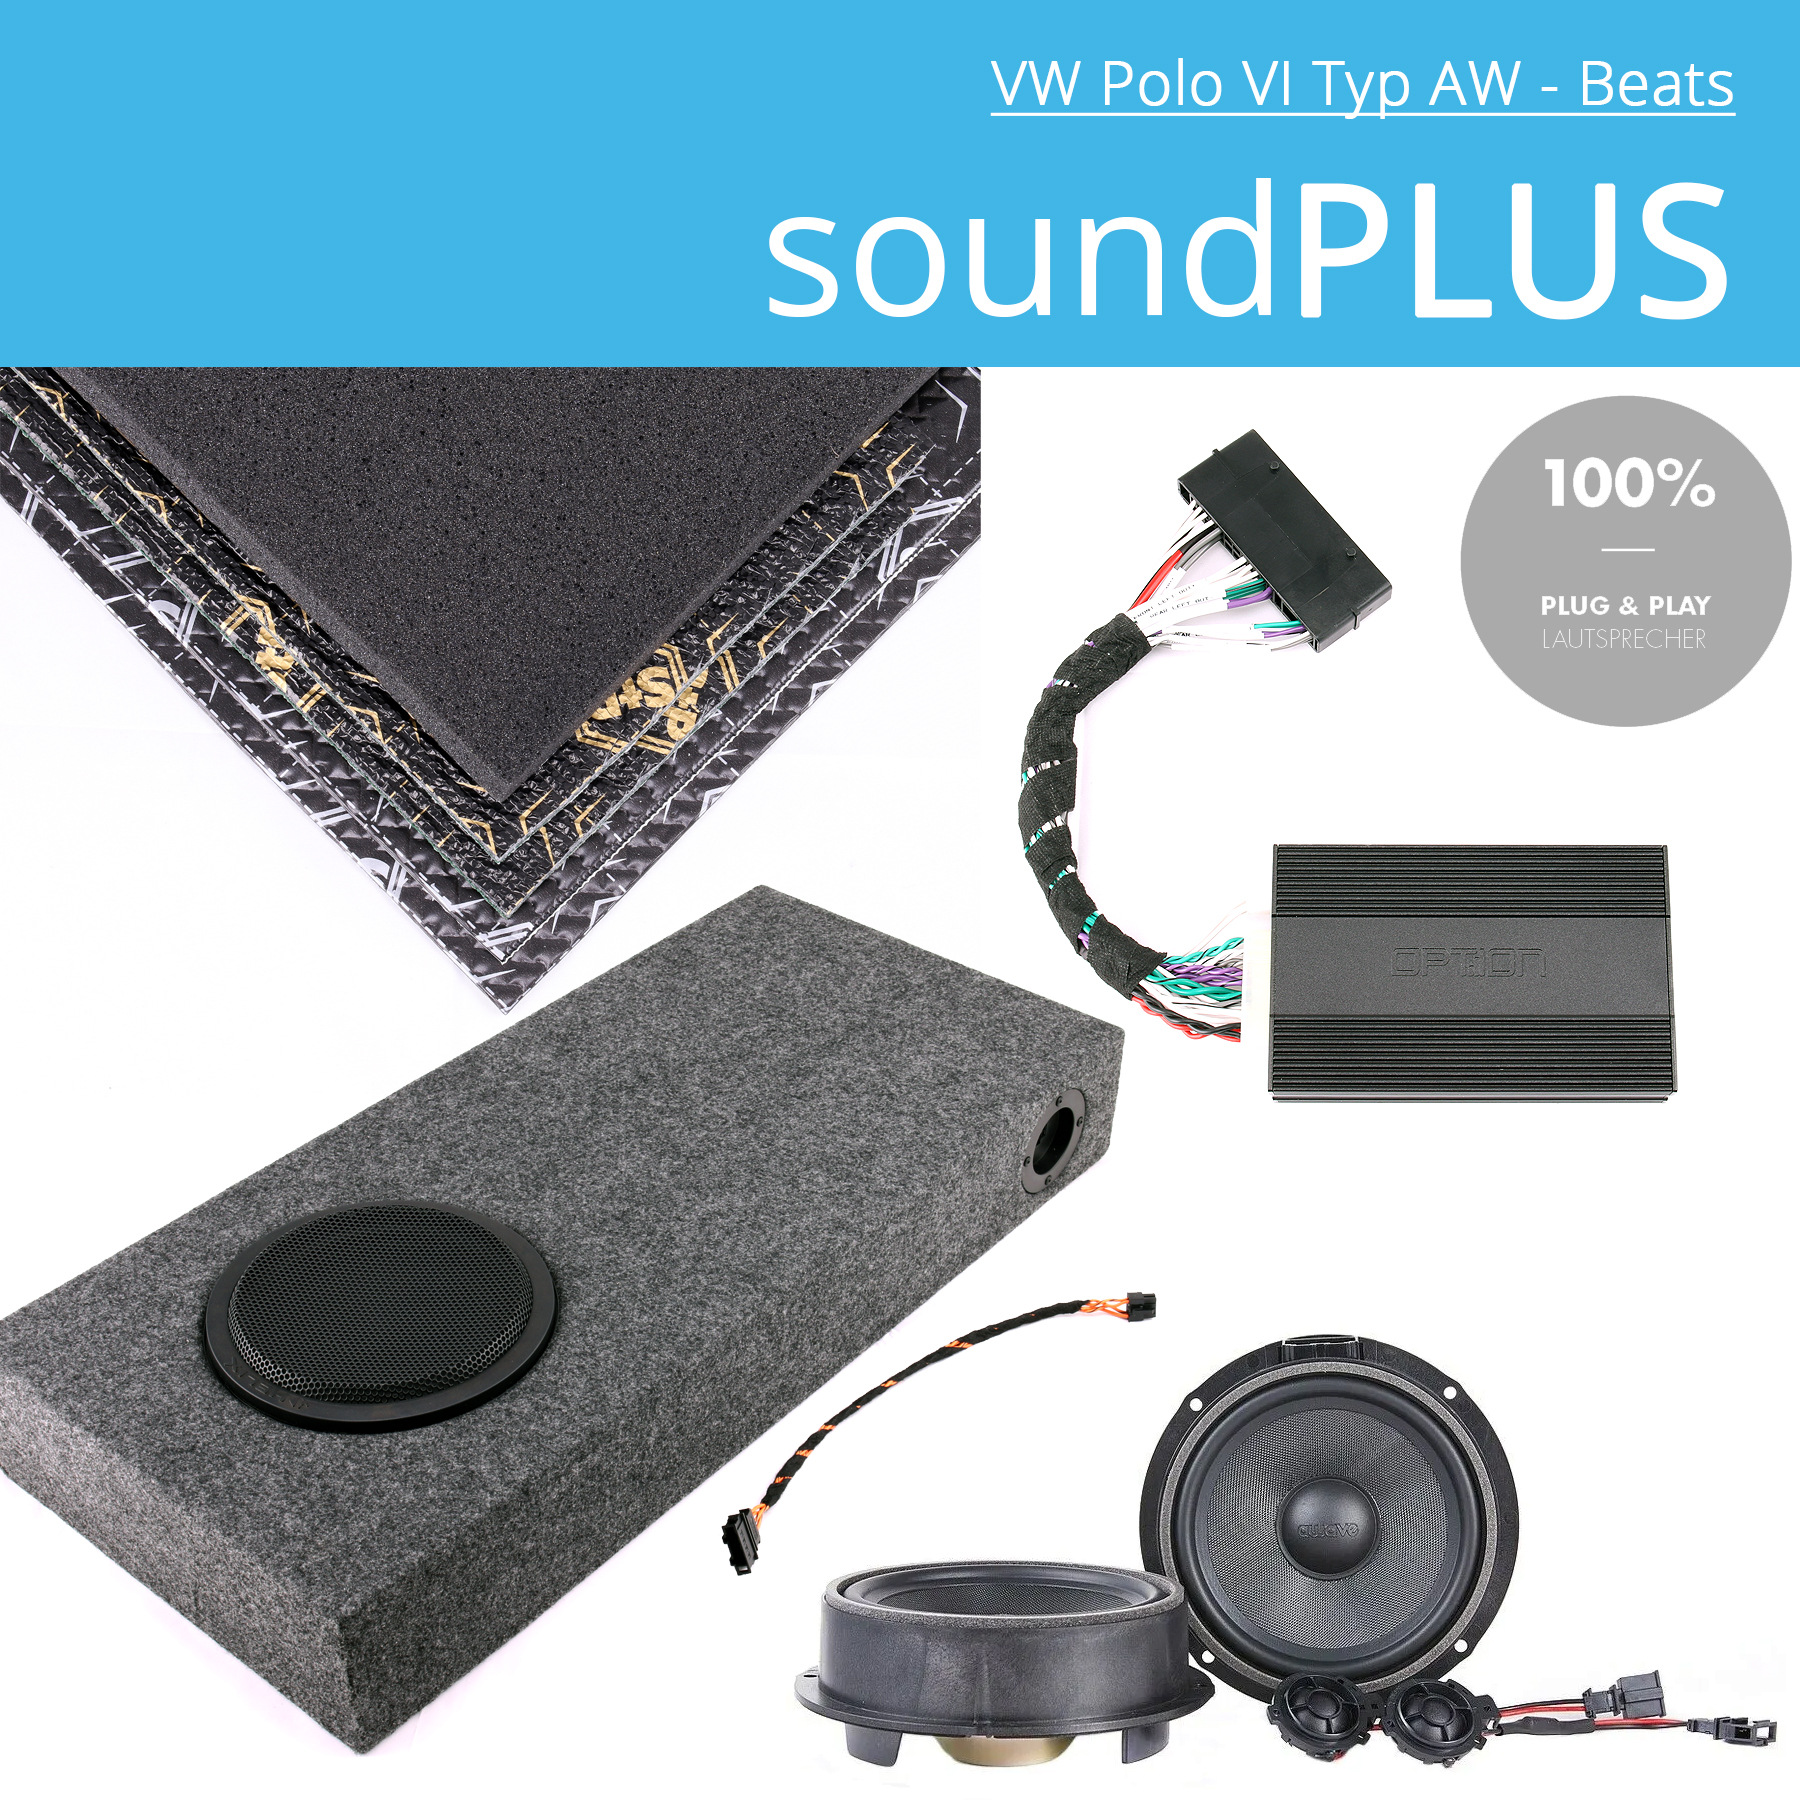 VW Polo VI soundPLUS-Beats